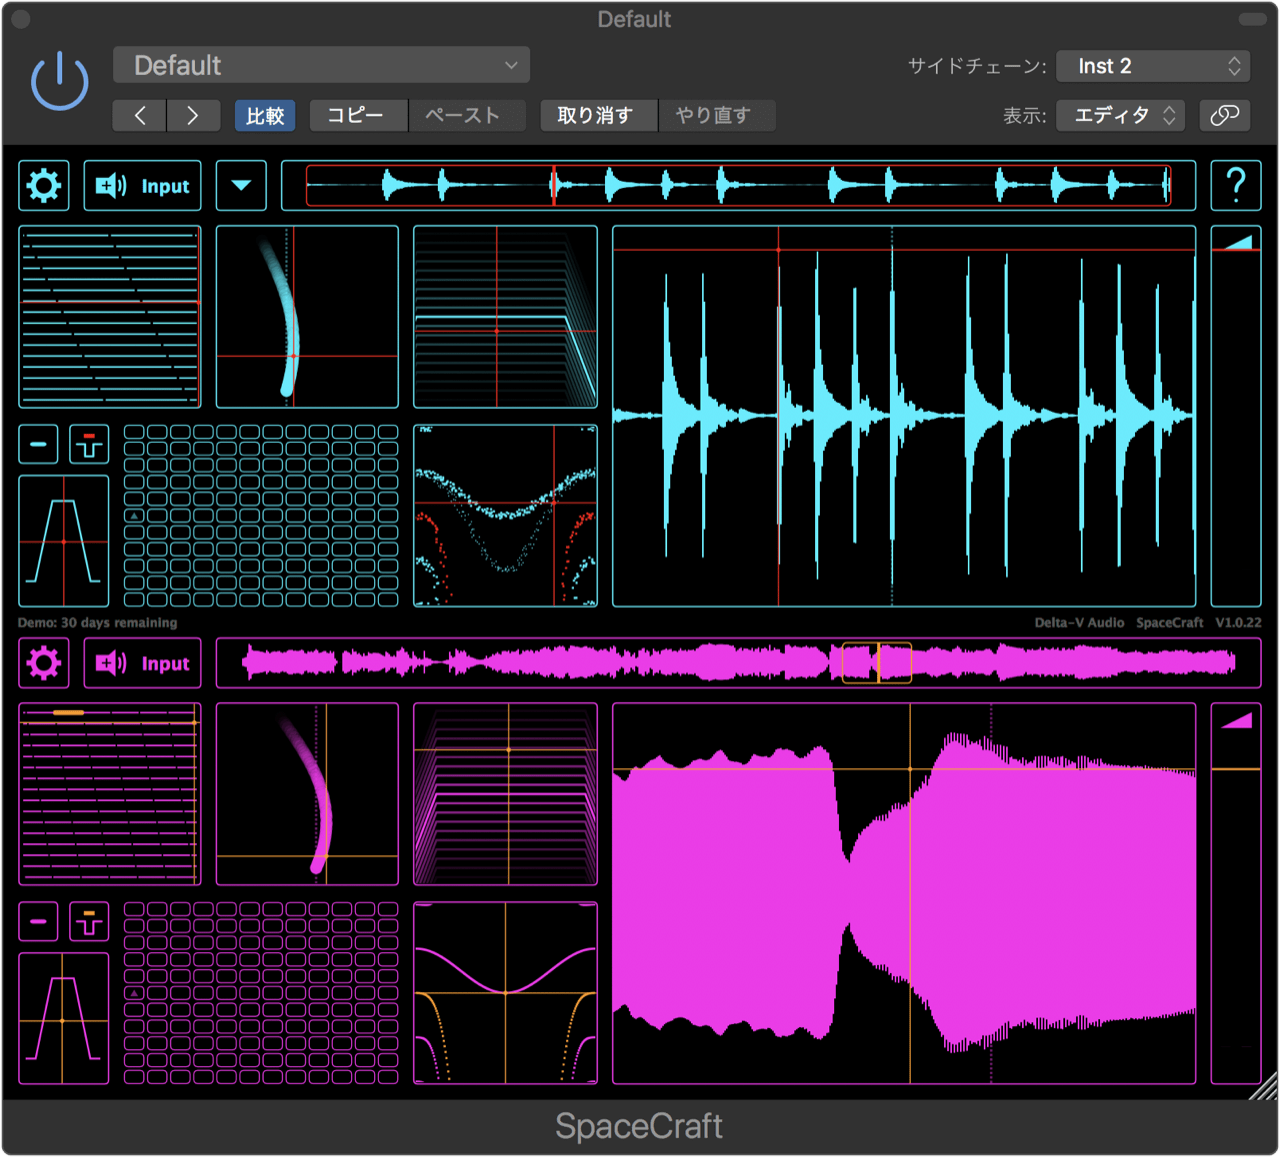 Delta-V Audio SpaceCraft | Granular Synth Plugin - Tracktion Presents